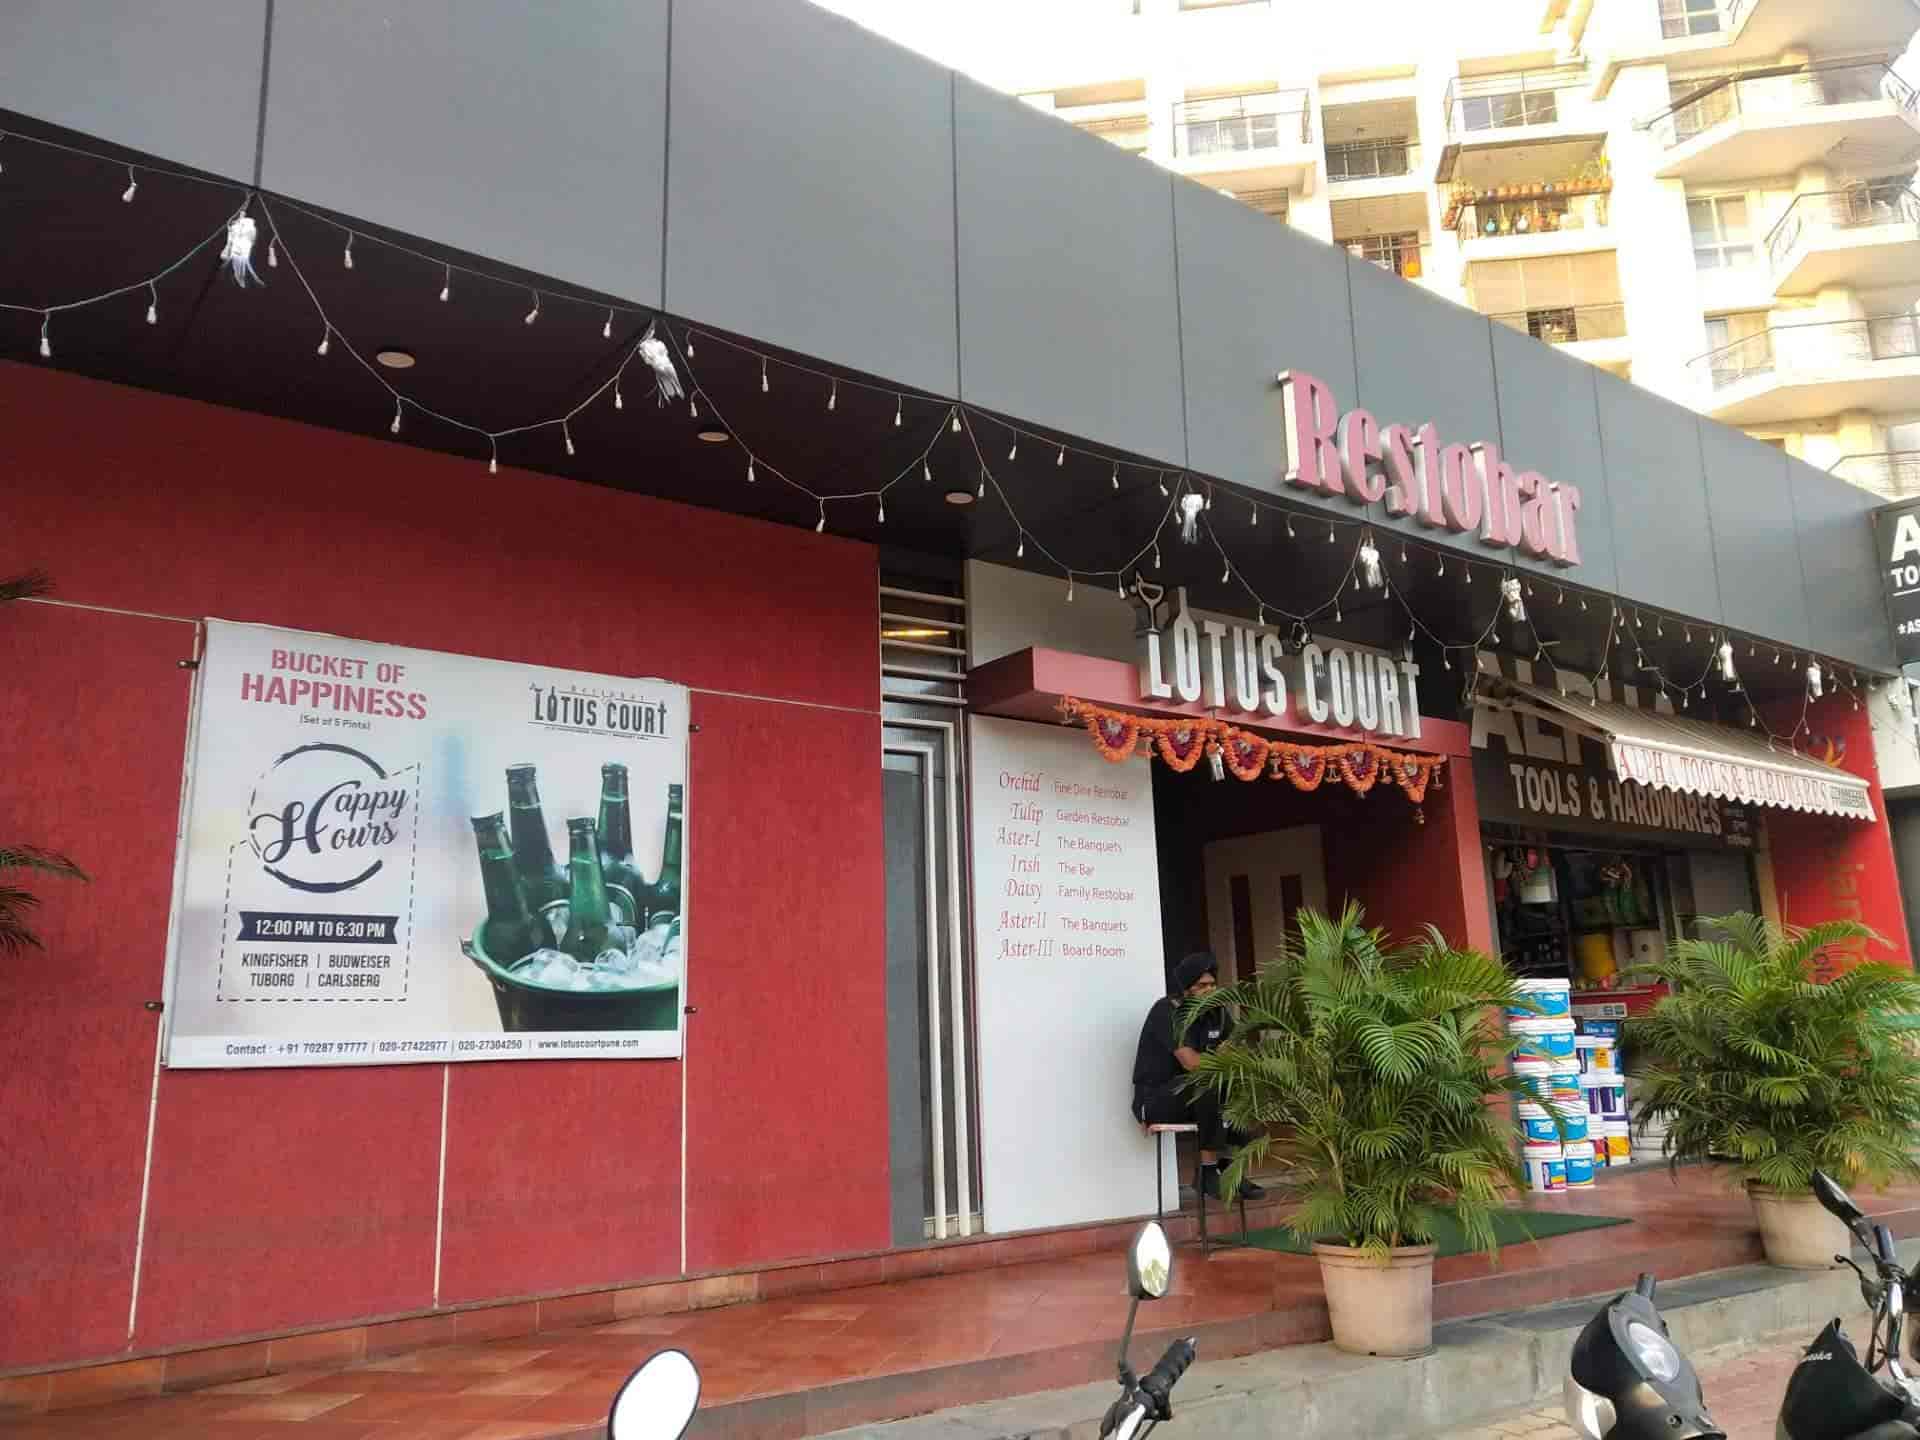 Lotus Court Restro Bar, Pimpri - Live Sports Screenings in Pune - Justdial